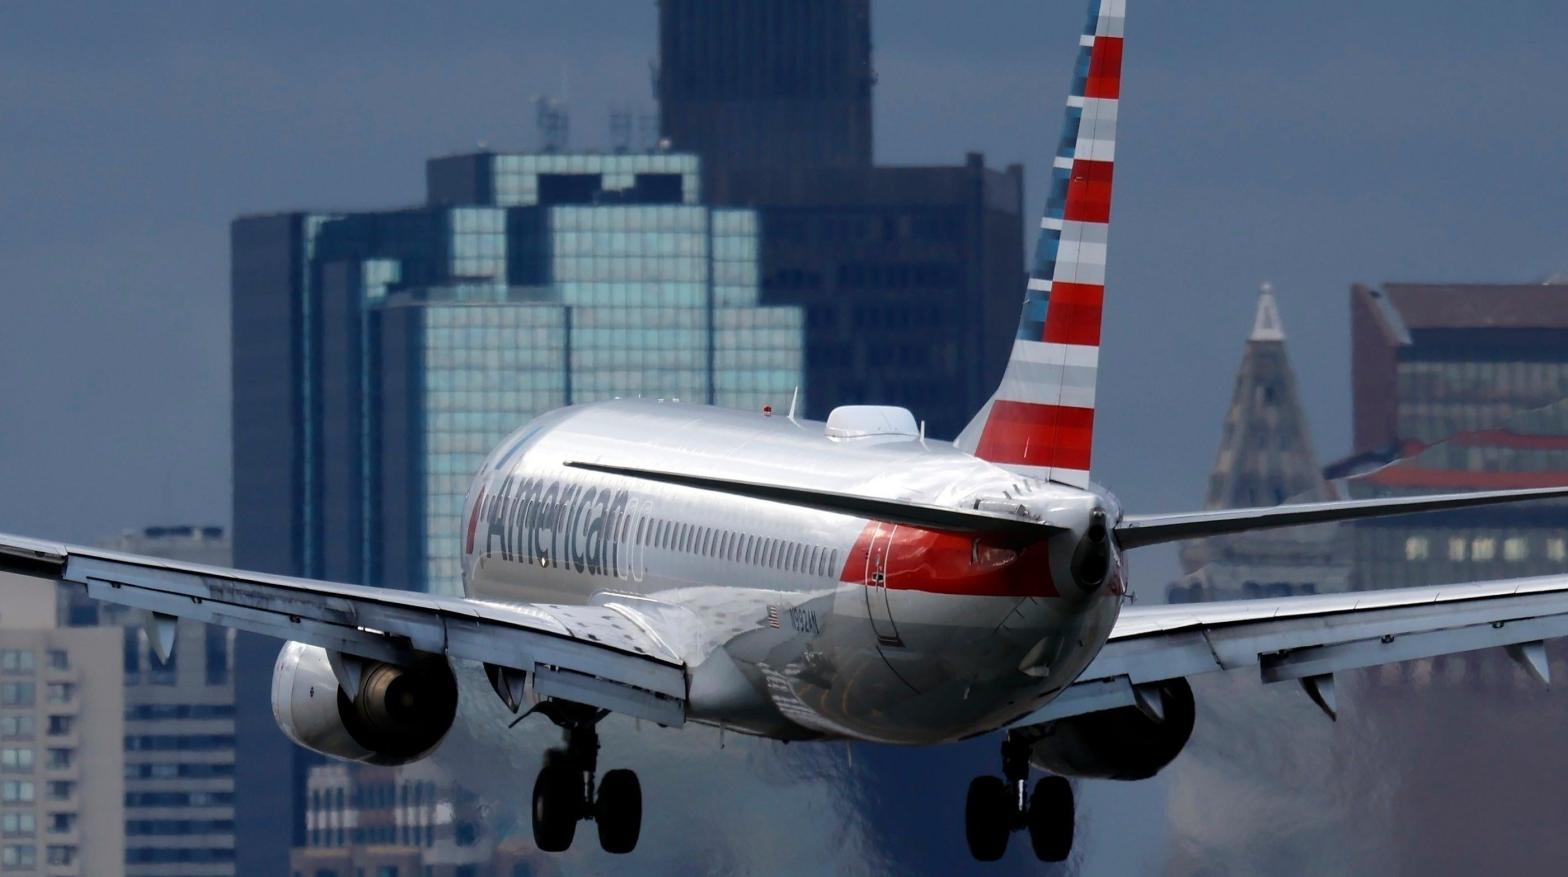 An American Airlines plane lands at Logan International Airport, Thursday, Jan. 26, 2023, in Boston. (Photo: Michael Dwyer, AP)